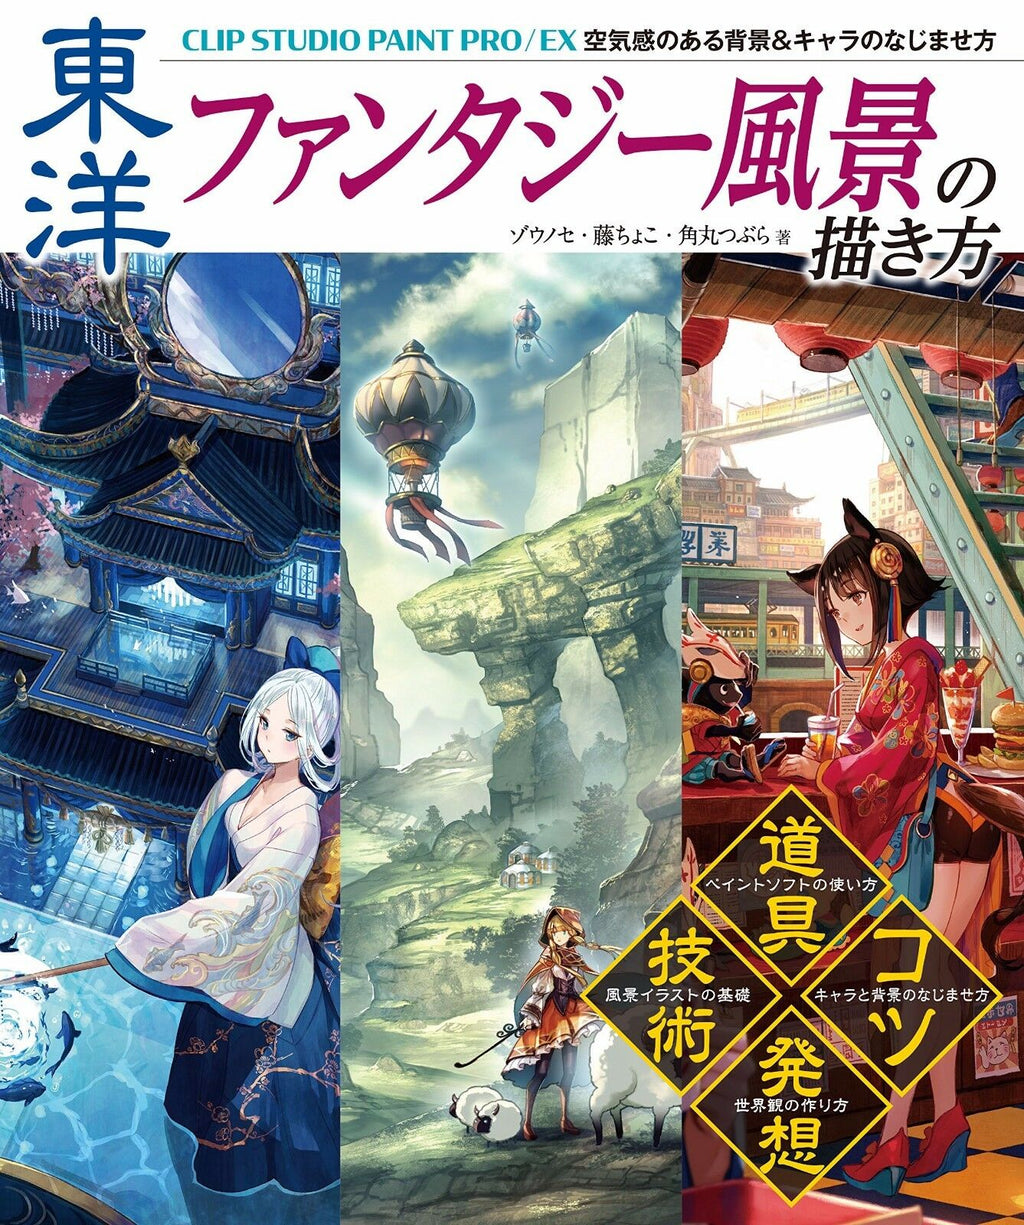 NEW' How To Draw Manga Oriental Fantasy Landscape Book | Japan CLIP STUDIO PAINT